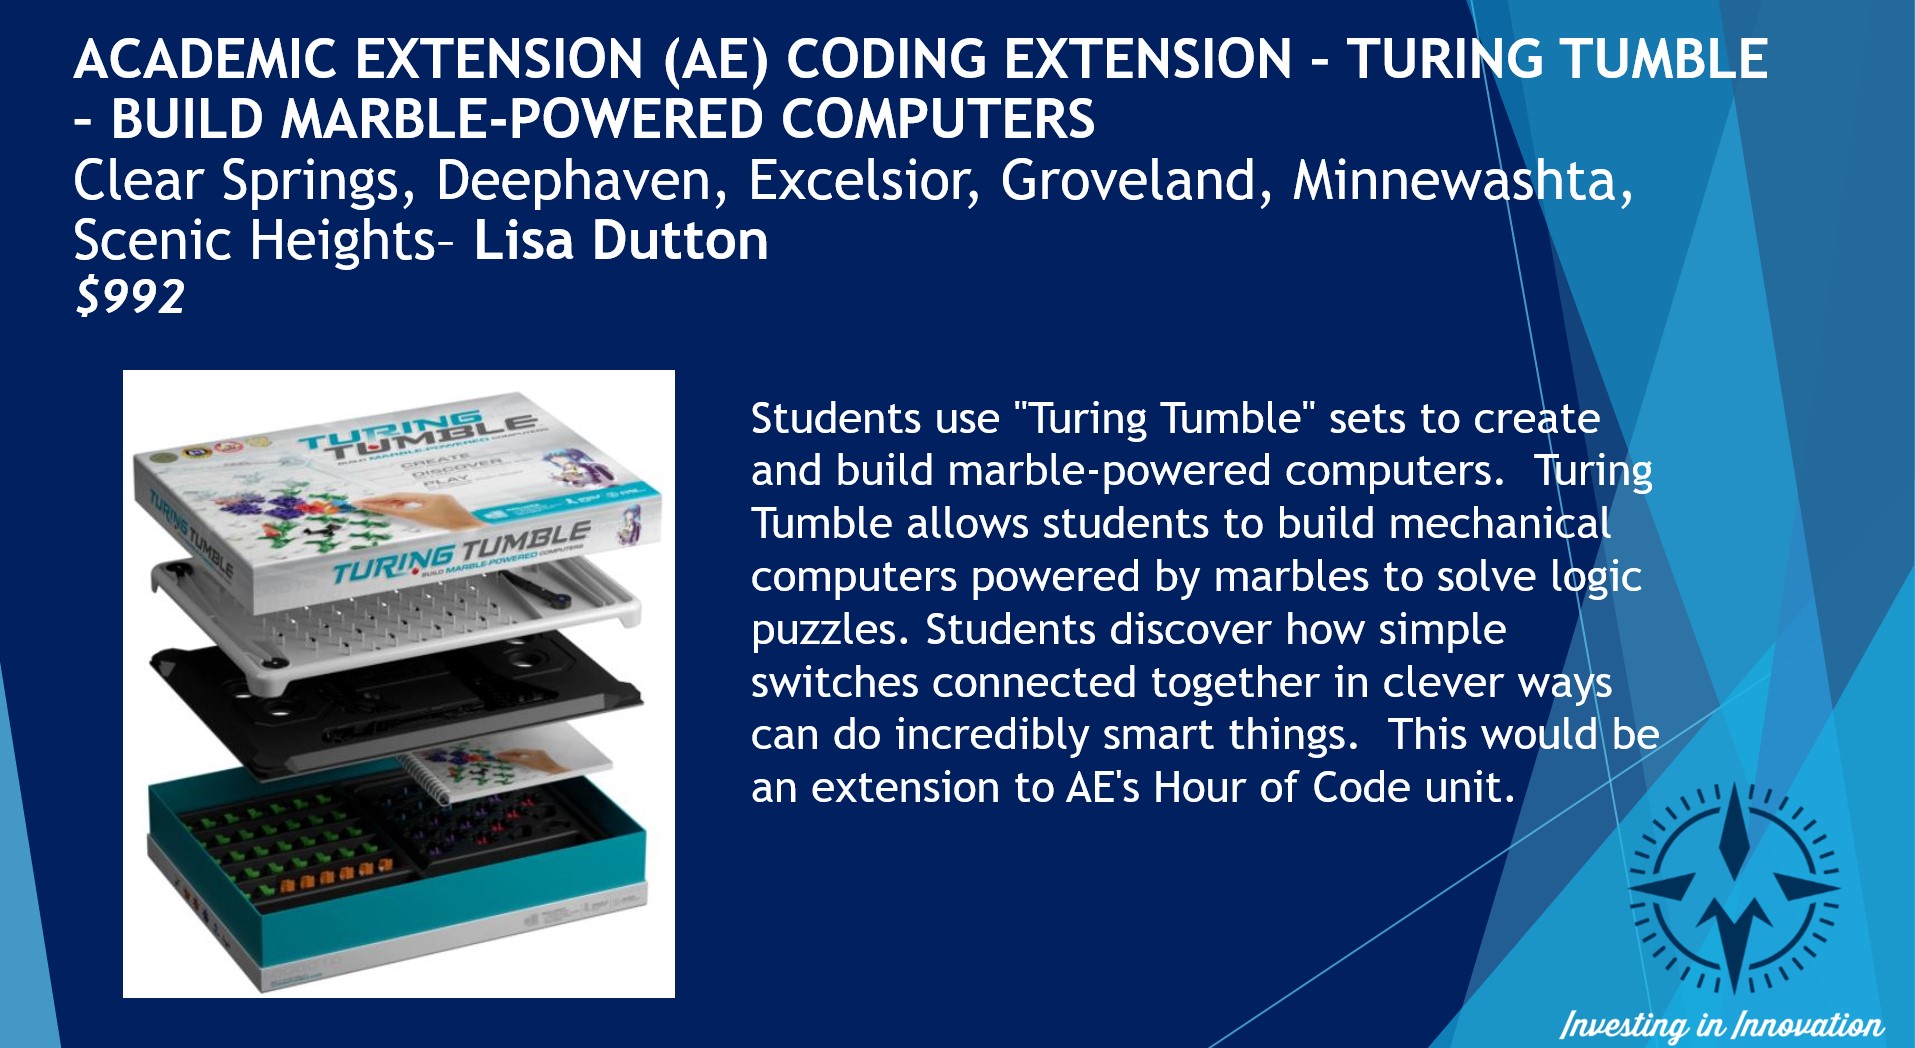 AE CE Turing Tumble